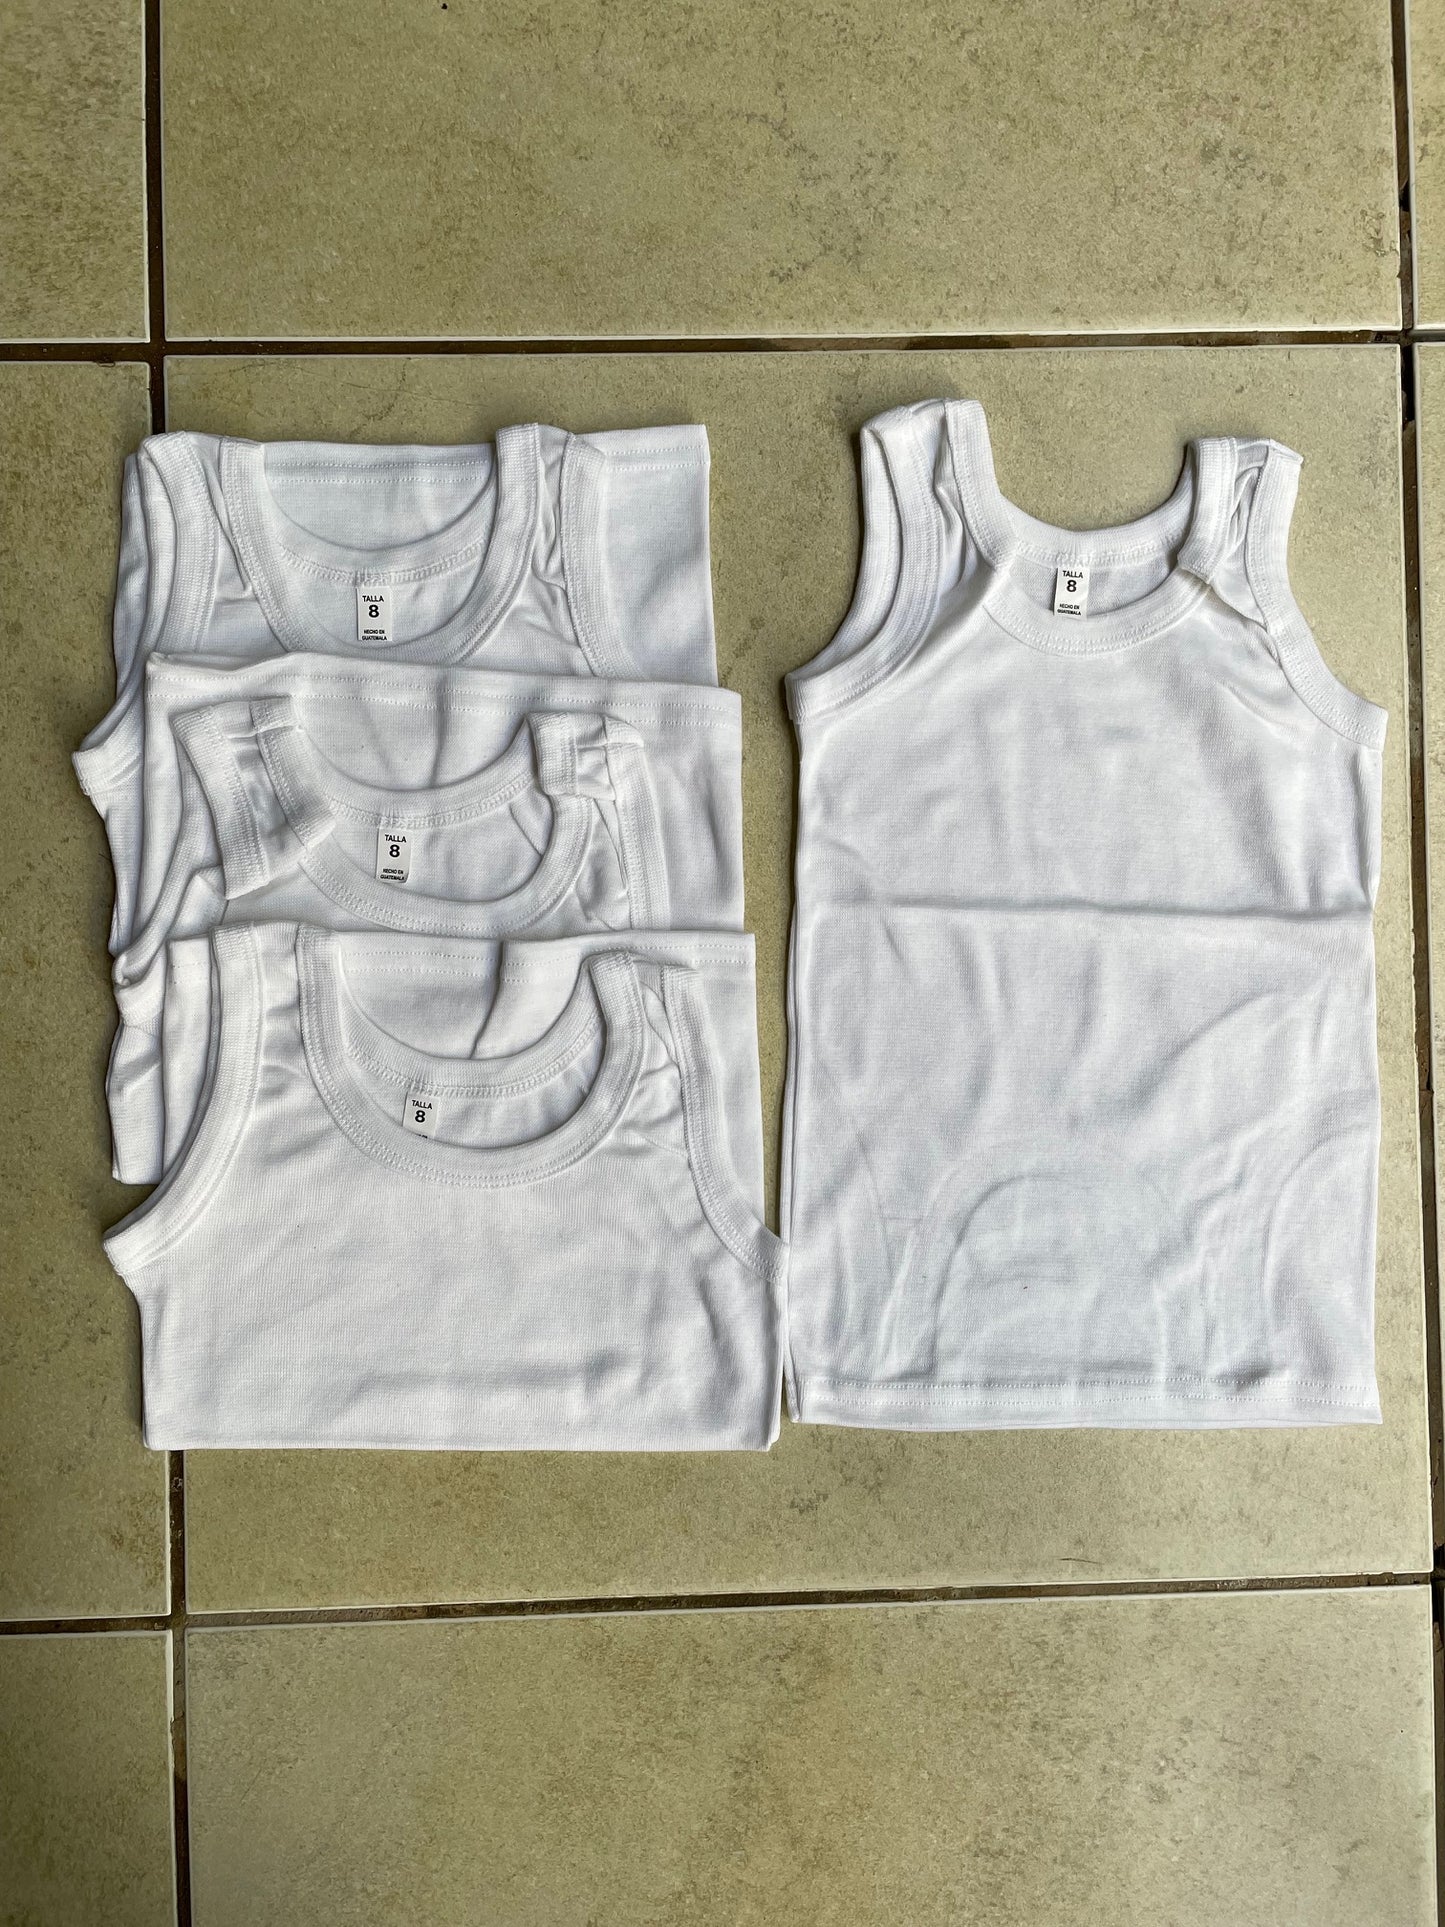 Camiseta de niño blanca (paquete de 2 unidades)